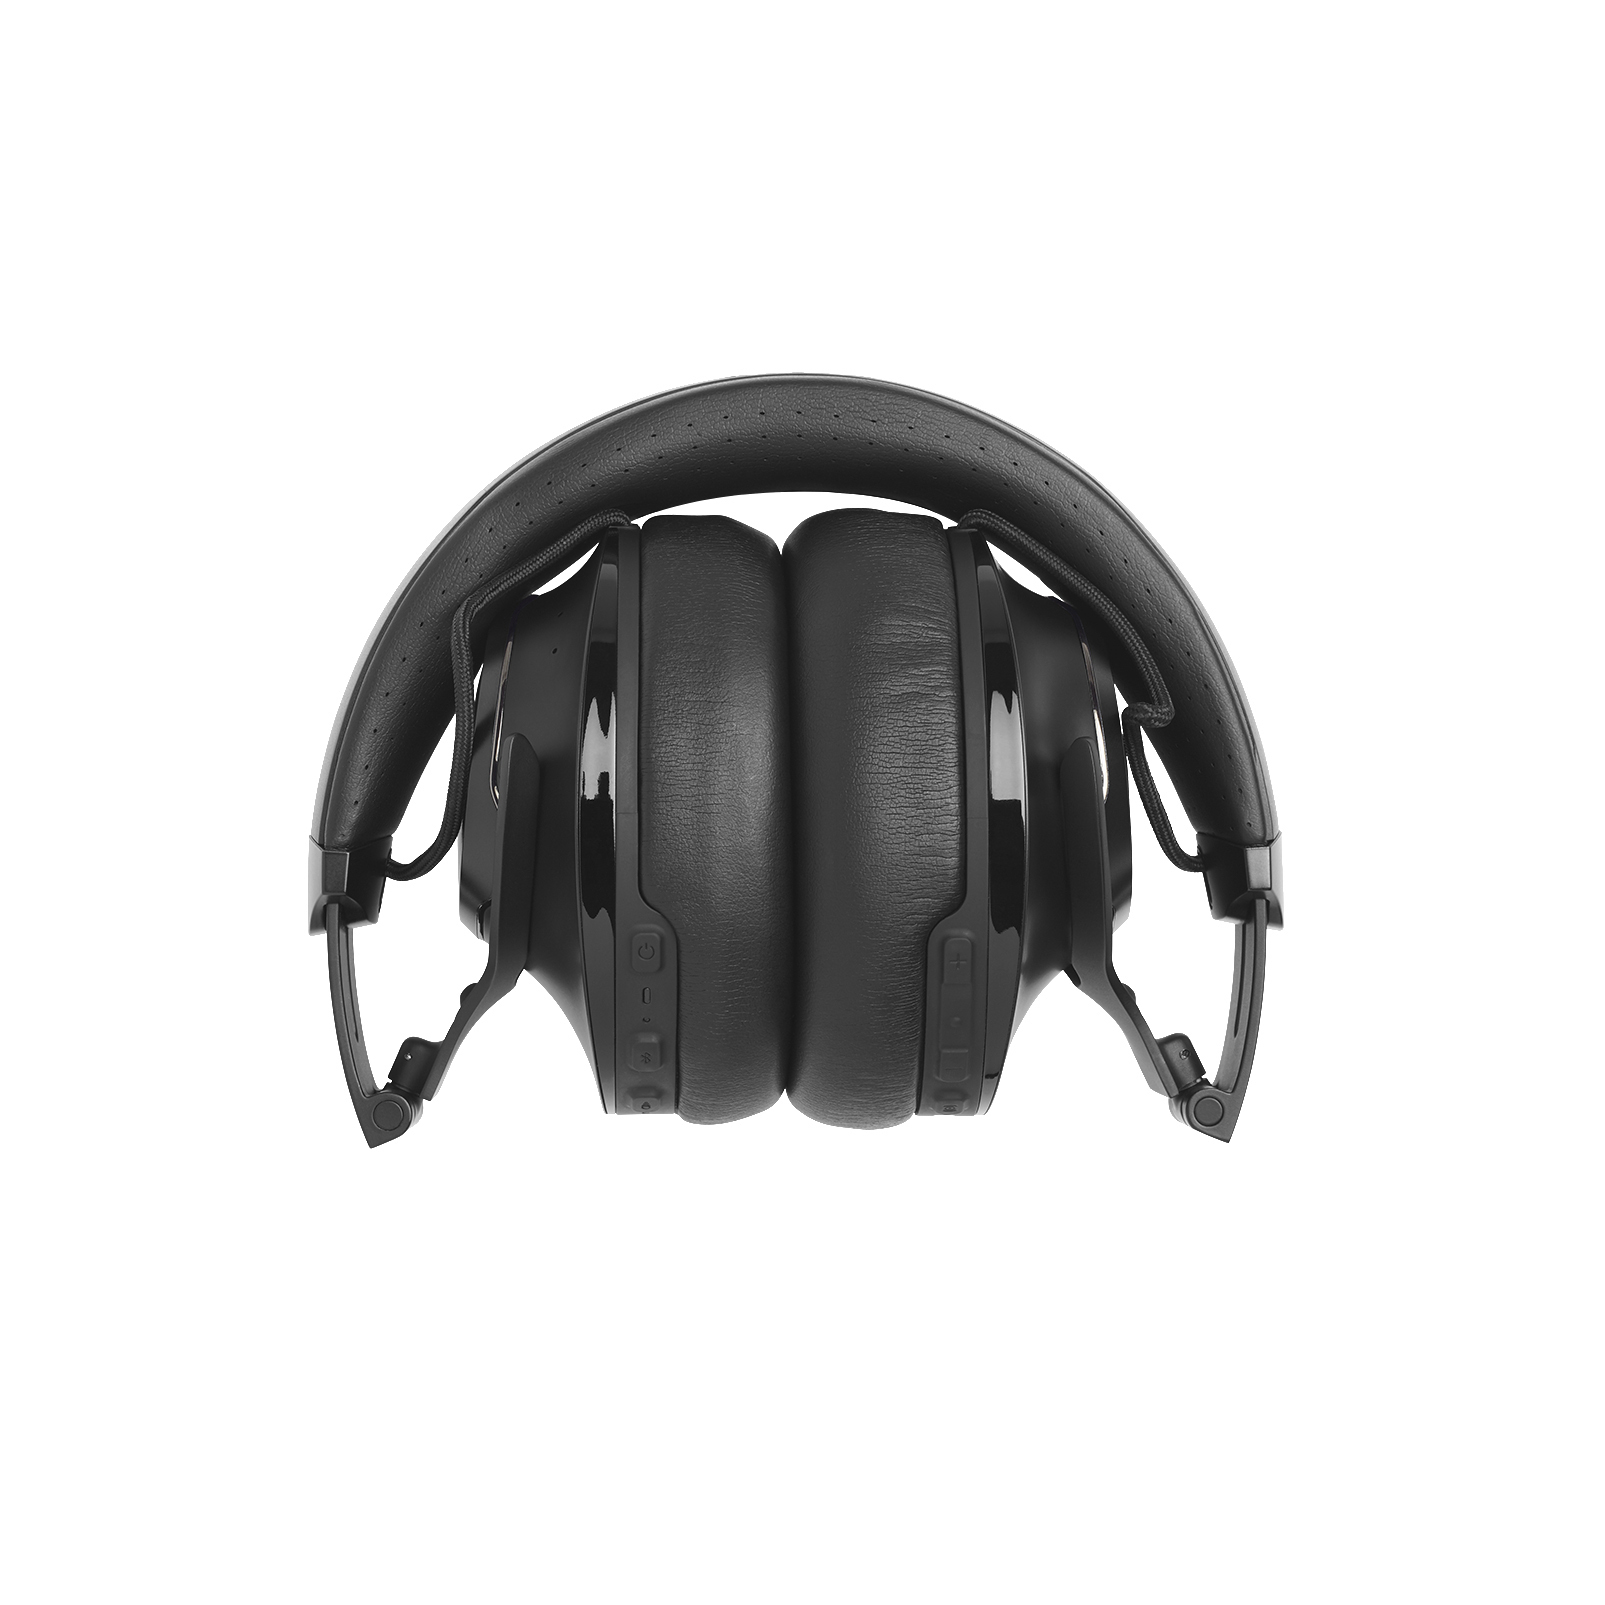 JBL Club NC, Over-ear Schwarz 950 Kopfhörer Bluetooth